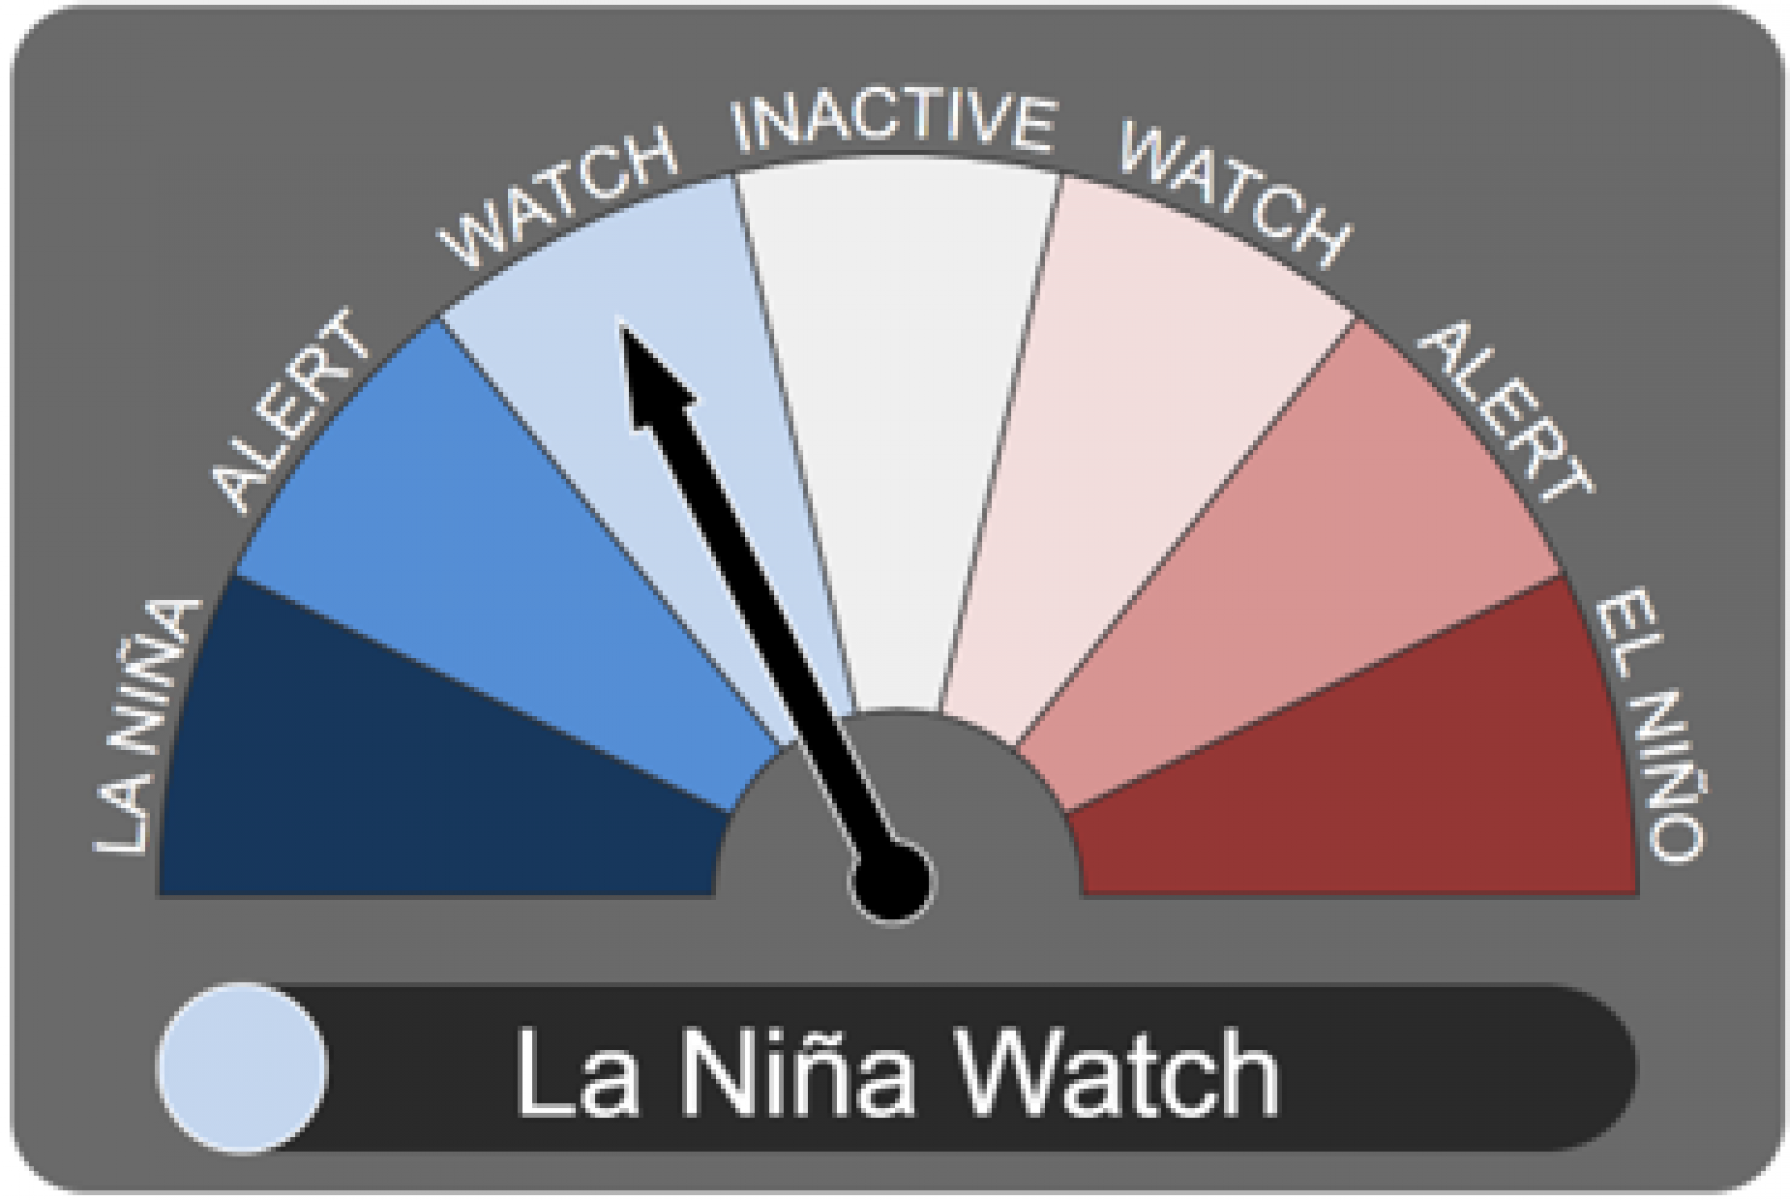 ENSO outlook set to La Nina Watch status